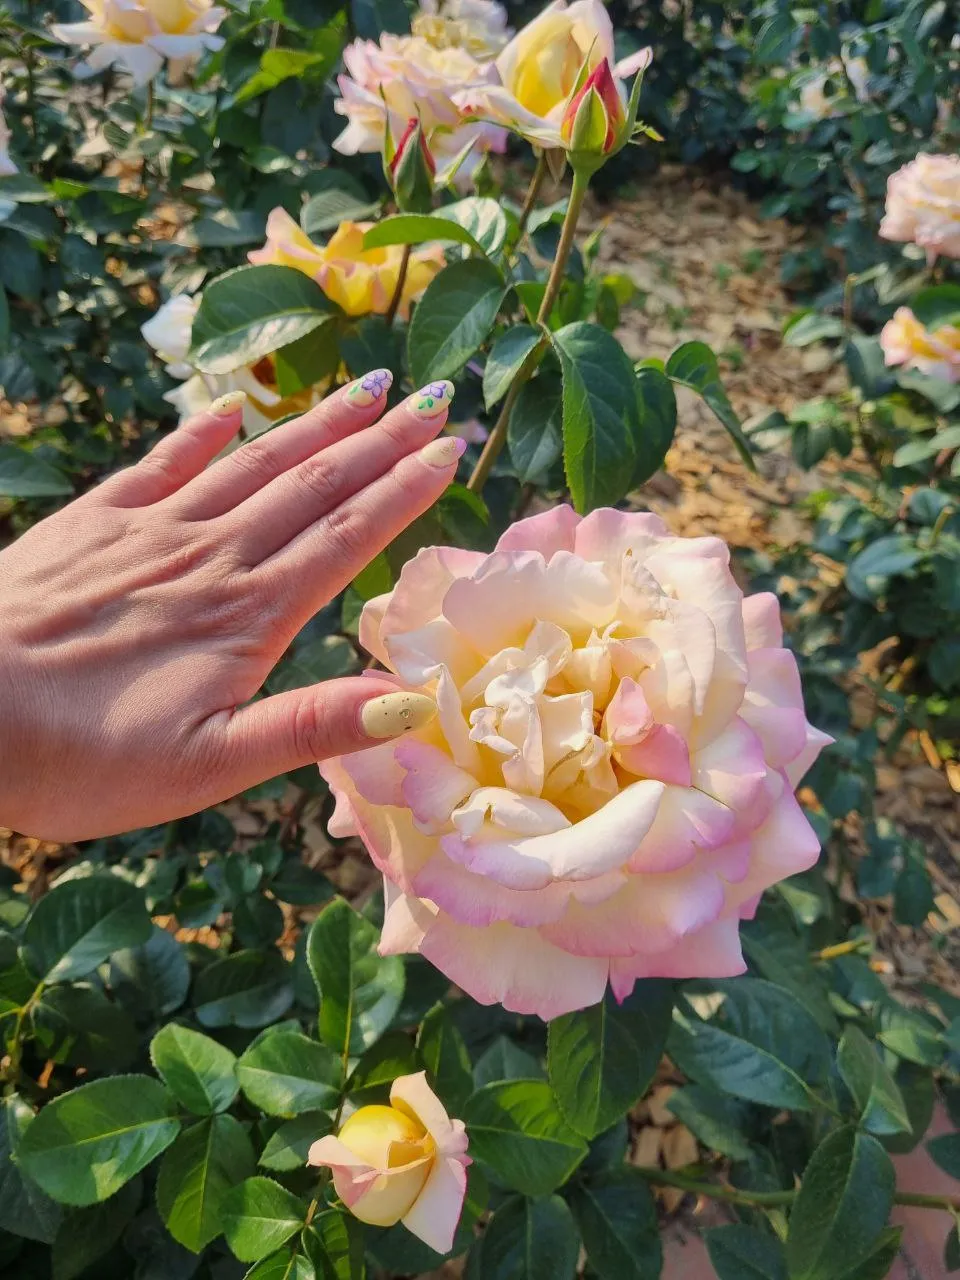 Rose Festival in Korea
Фестиваль роз в Корее 2022